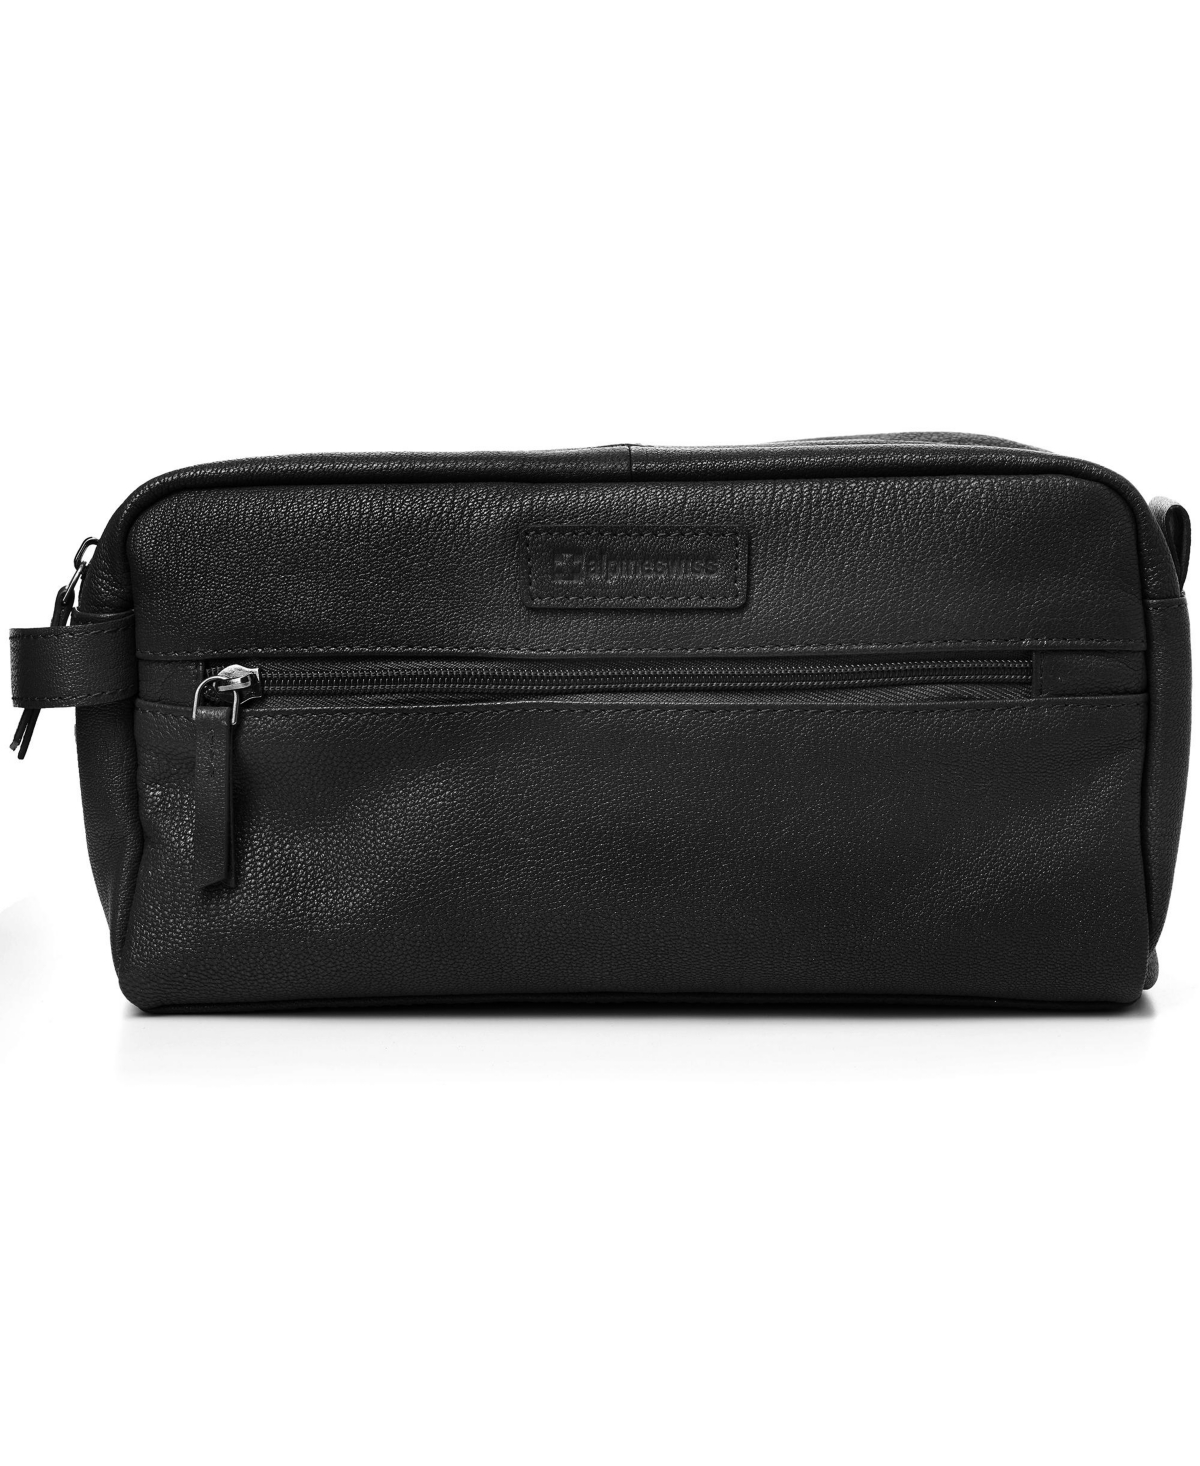 AlpineSwiss Sedona Toiletry Bag Genuine Leather Shaving Kit Dopp Kit Travel Case - Black